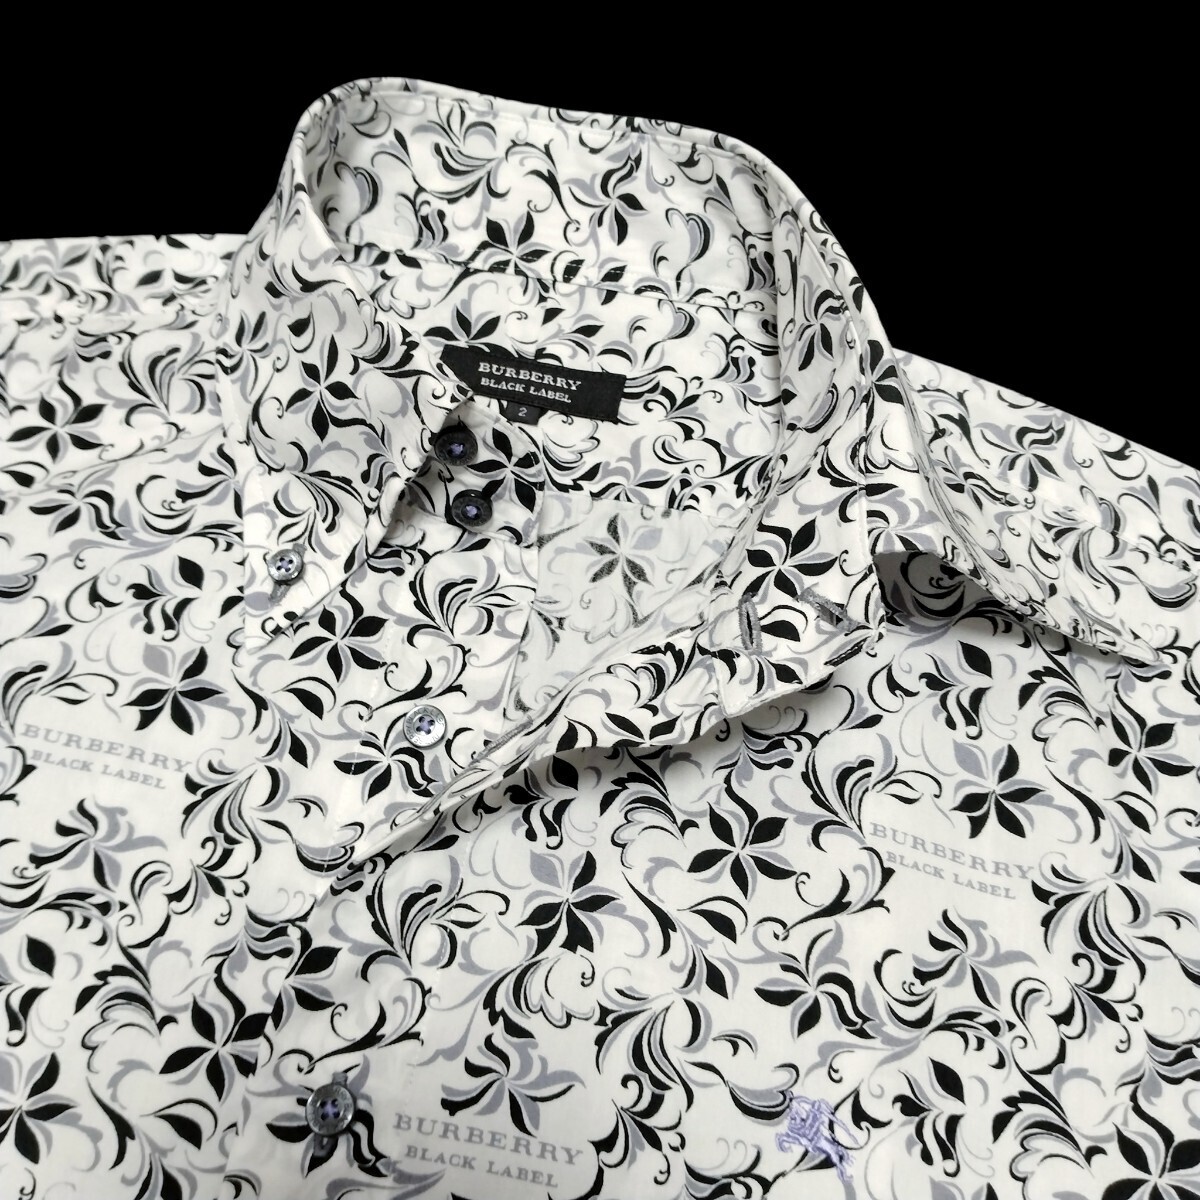  Burberry Black Label # цветок монограмма общий рисунок шланг вышивка 2(M) белый du evo to-ni длинный рукав BD рубашка BURBERRY BLACK LABEL